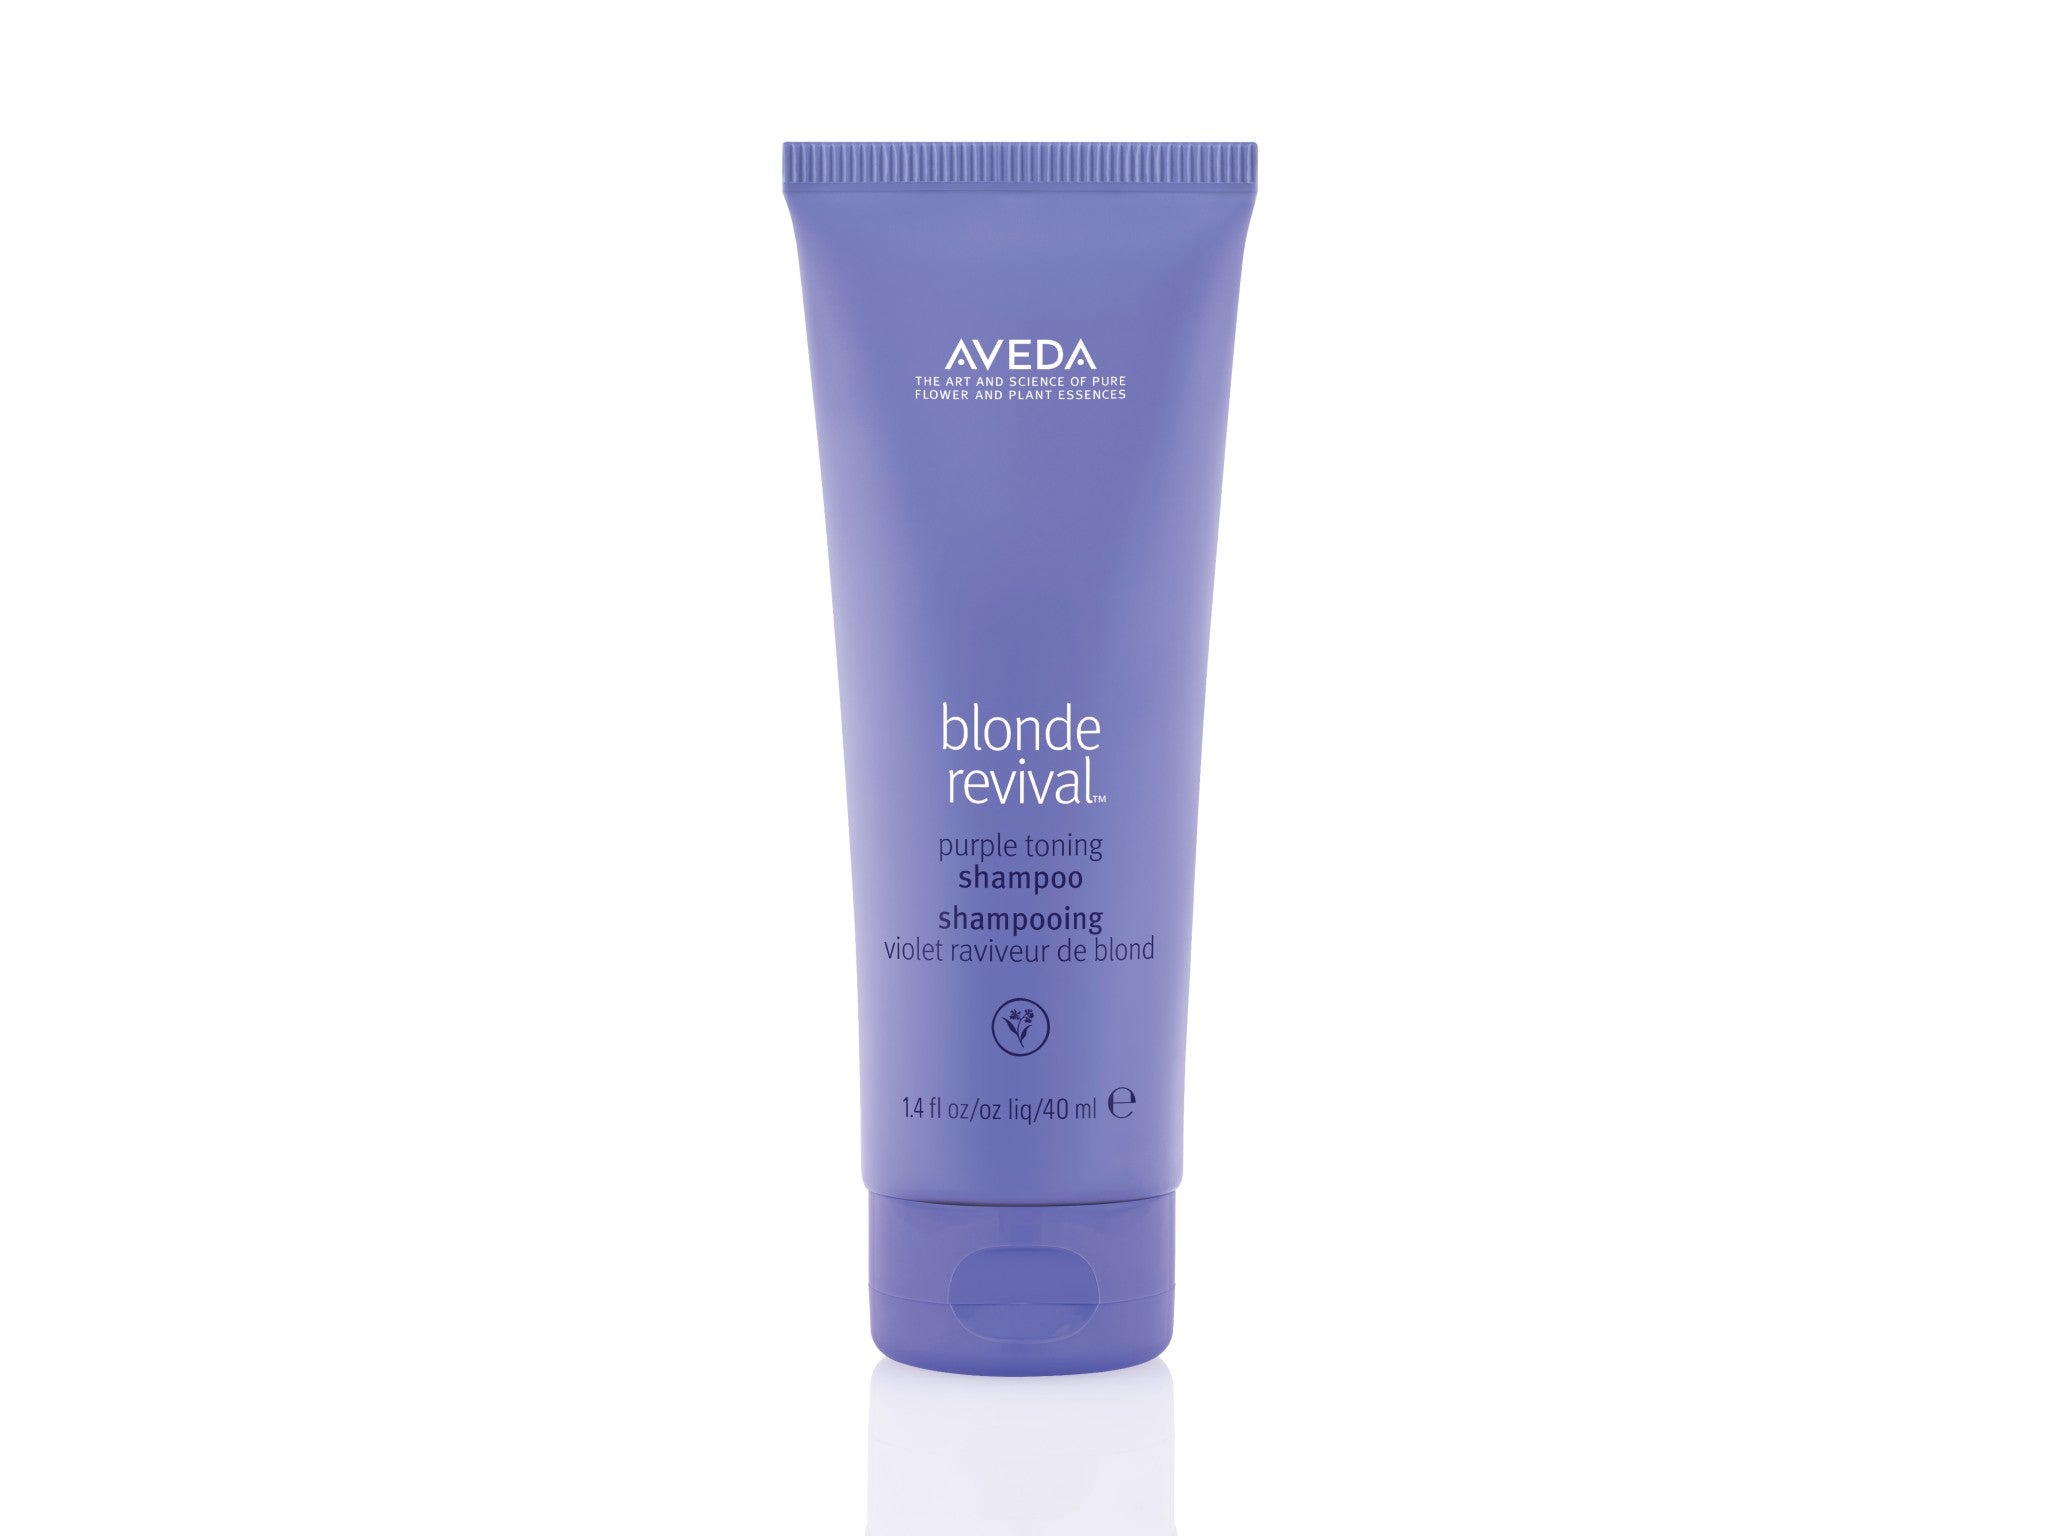 Aveda blonde revival purple tonight shampoo indybest.jpeg